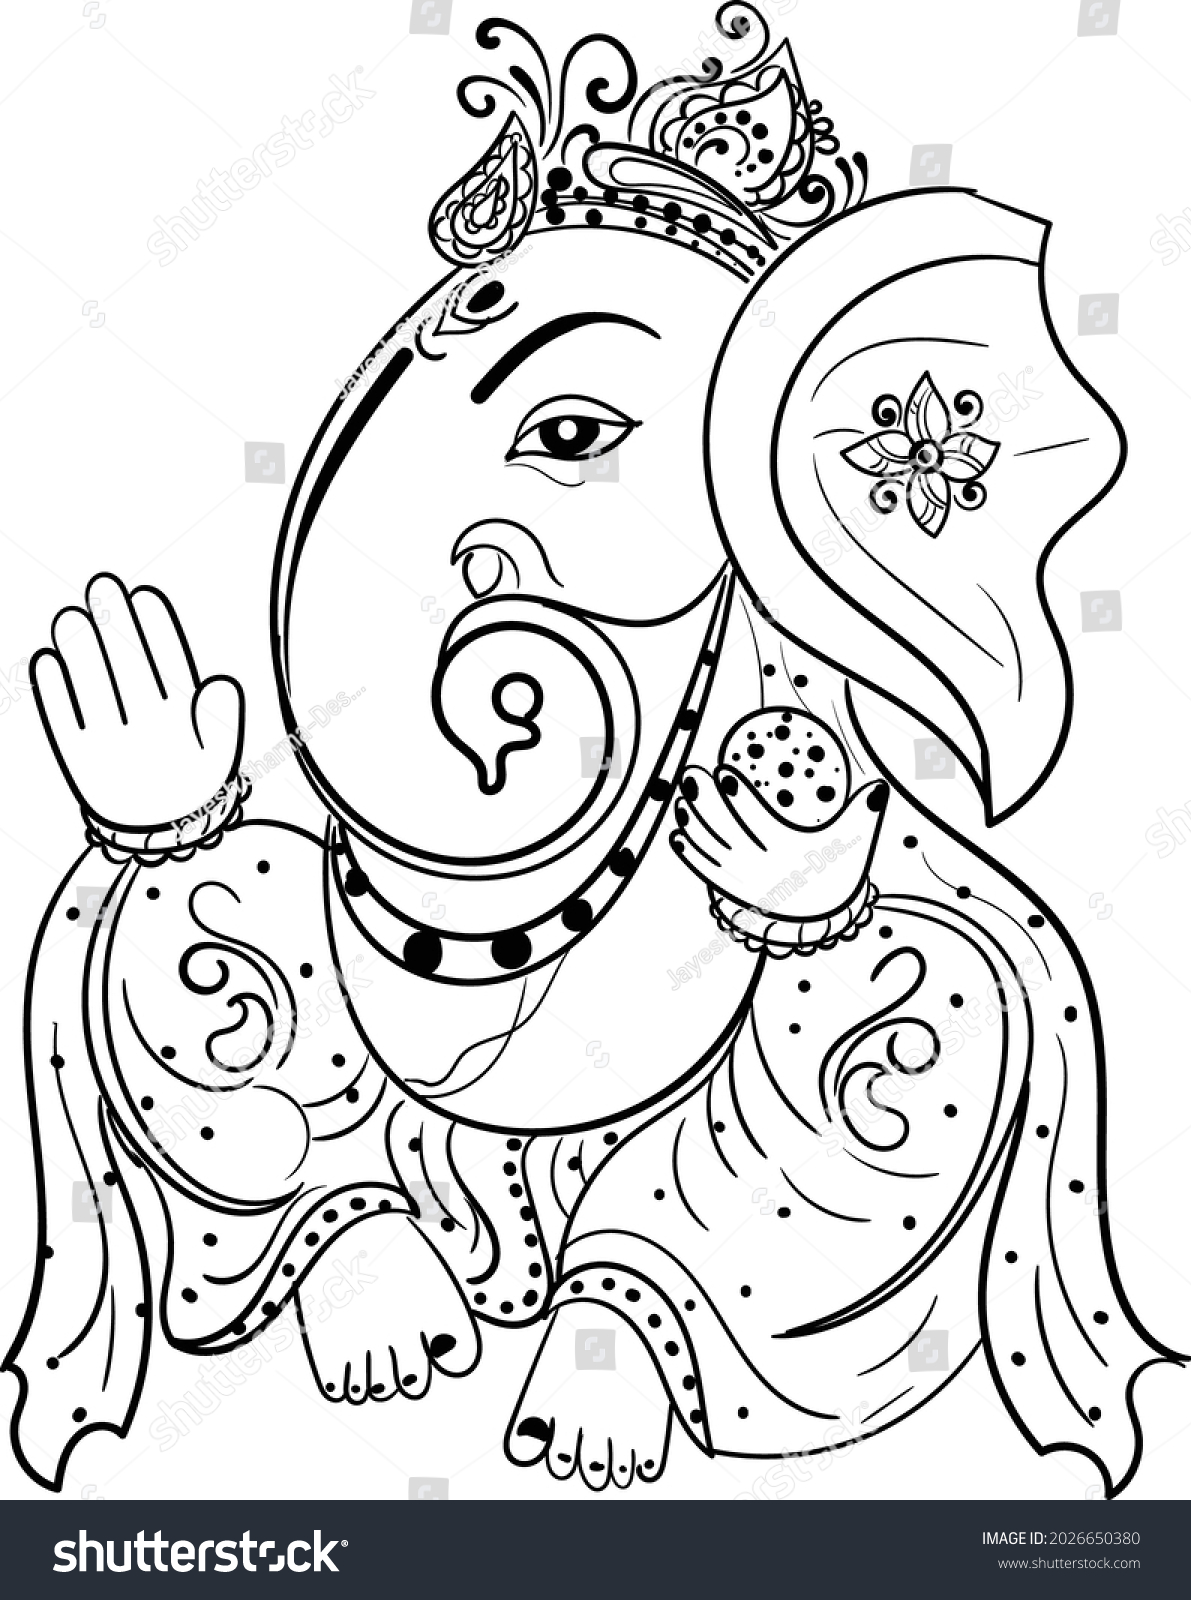 Indian wedding card clip art Lord Ganesha. God - Royalty Free Stock ...